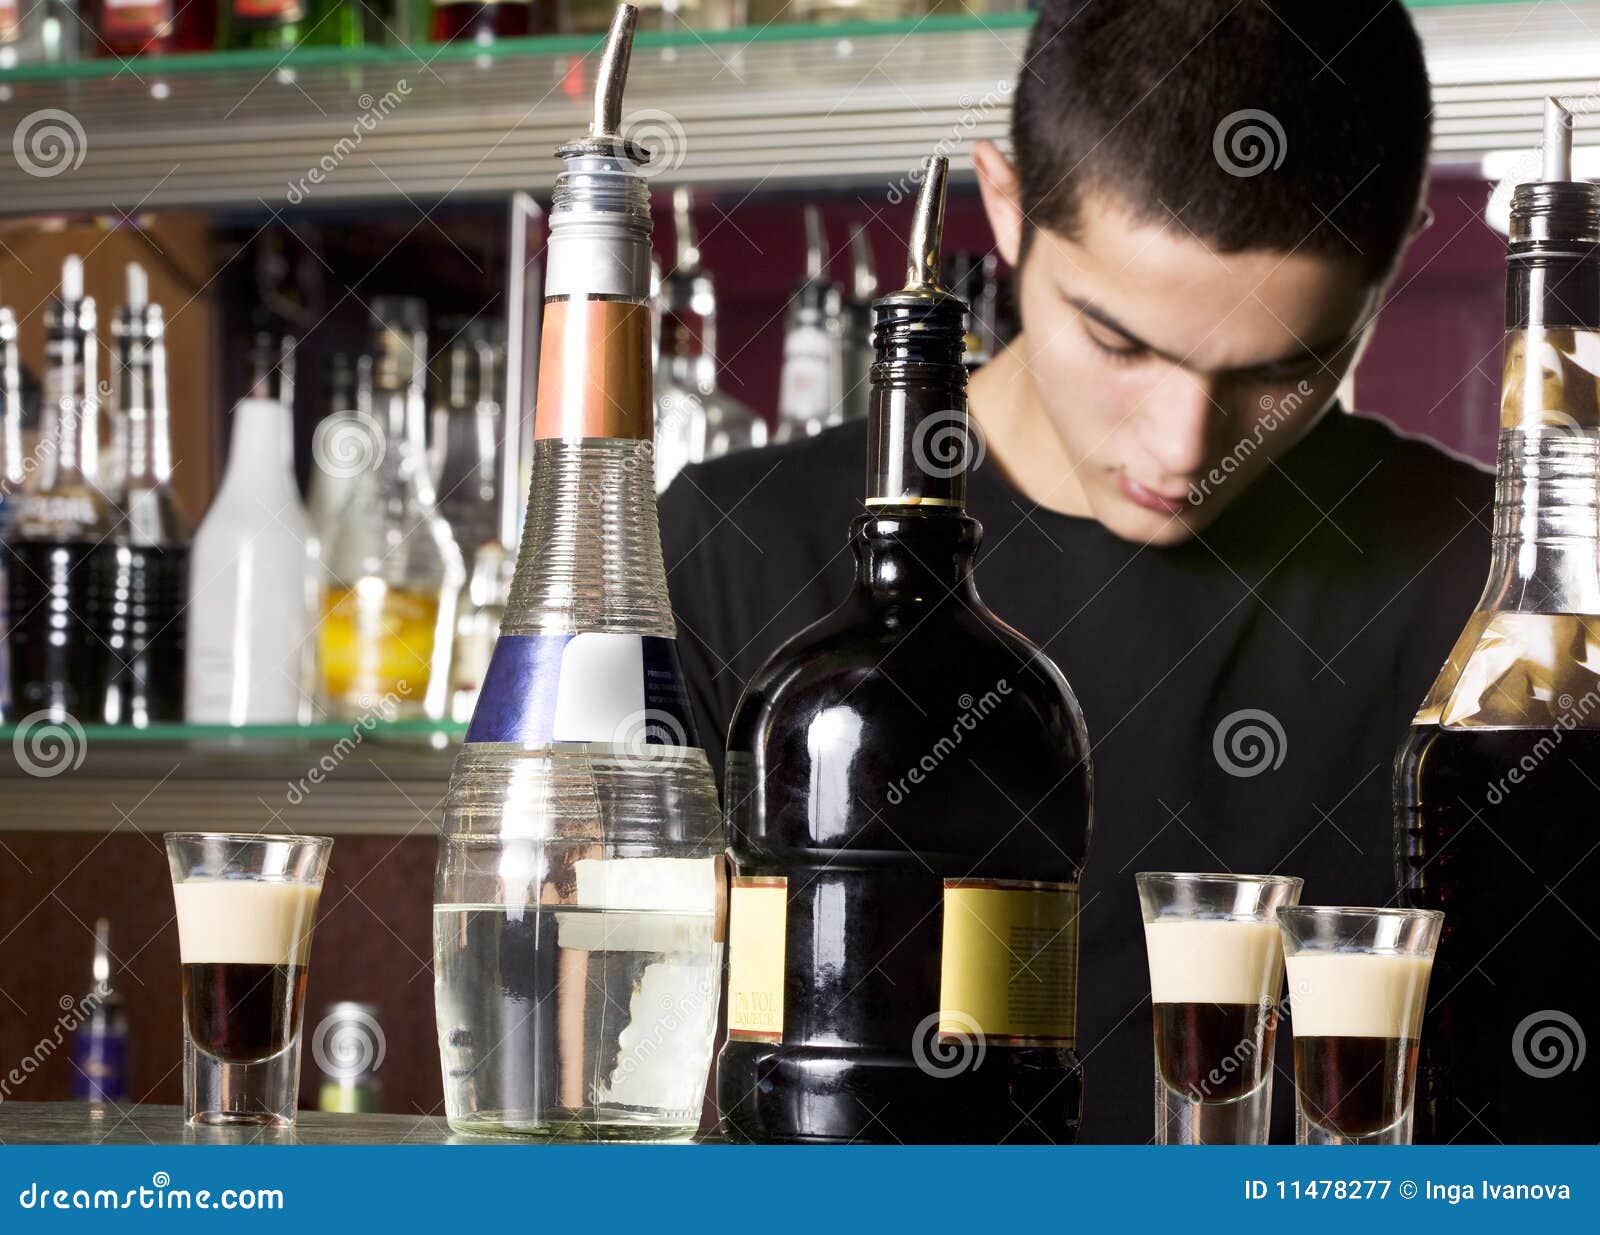 young barman